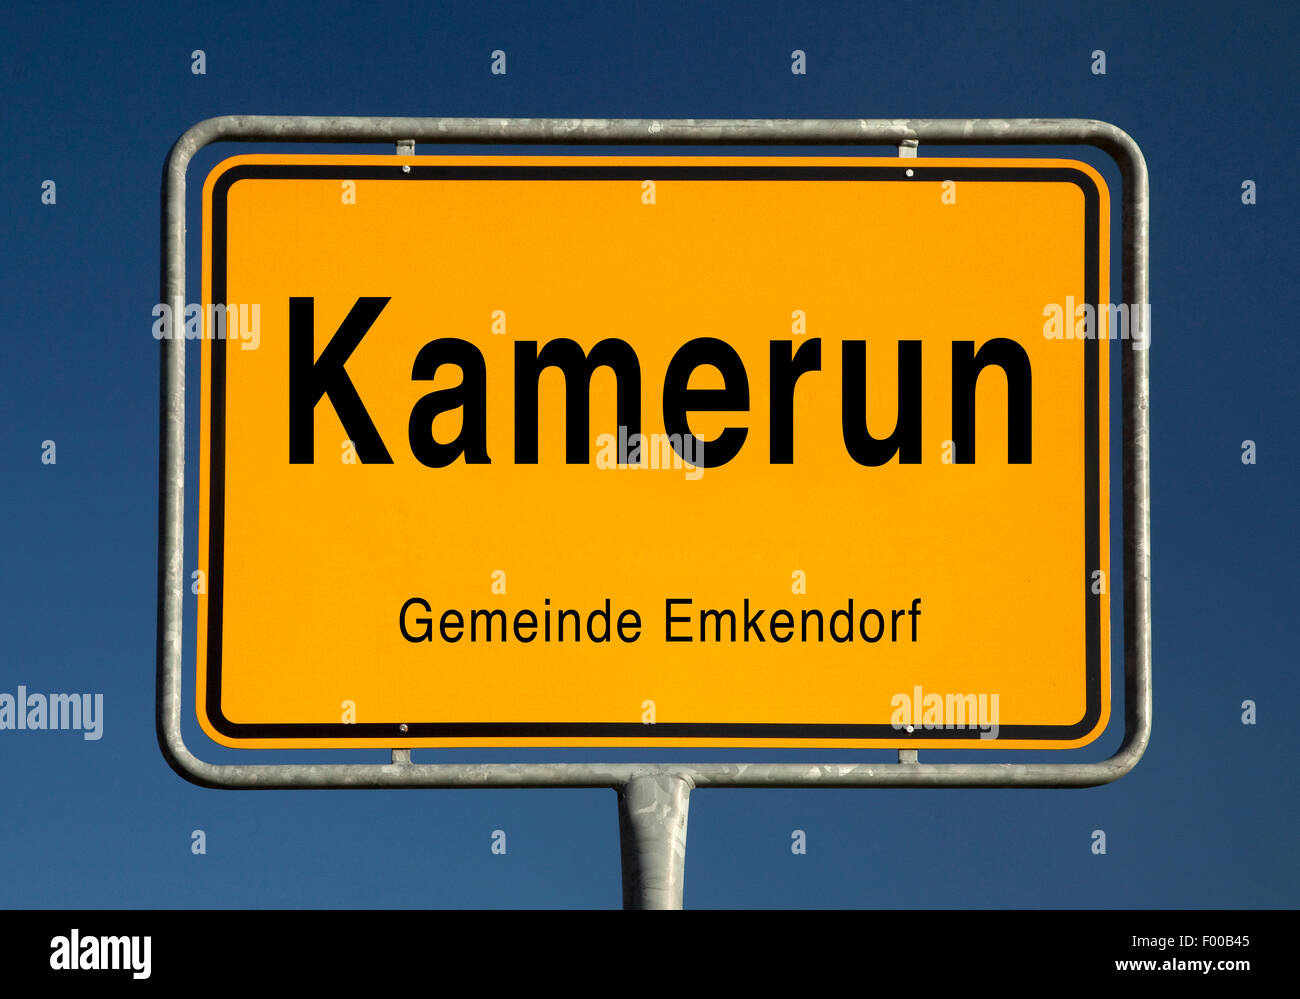 Kamerun place name sign, Germany, Schleswig-Holstein, Kreis Rendsburg-Eckernfoerde, Emkendorf Stock Photo